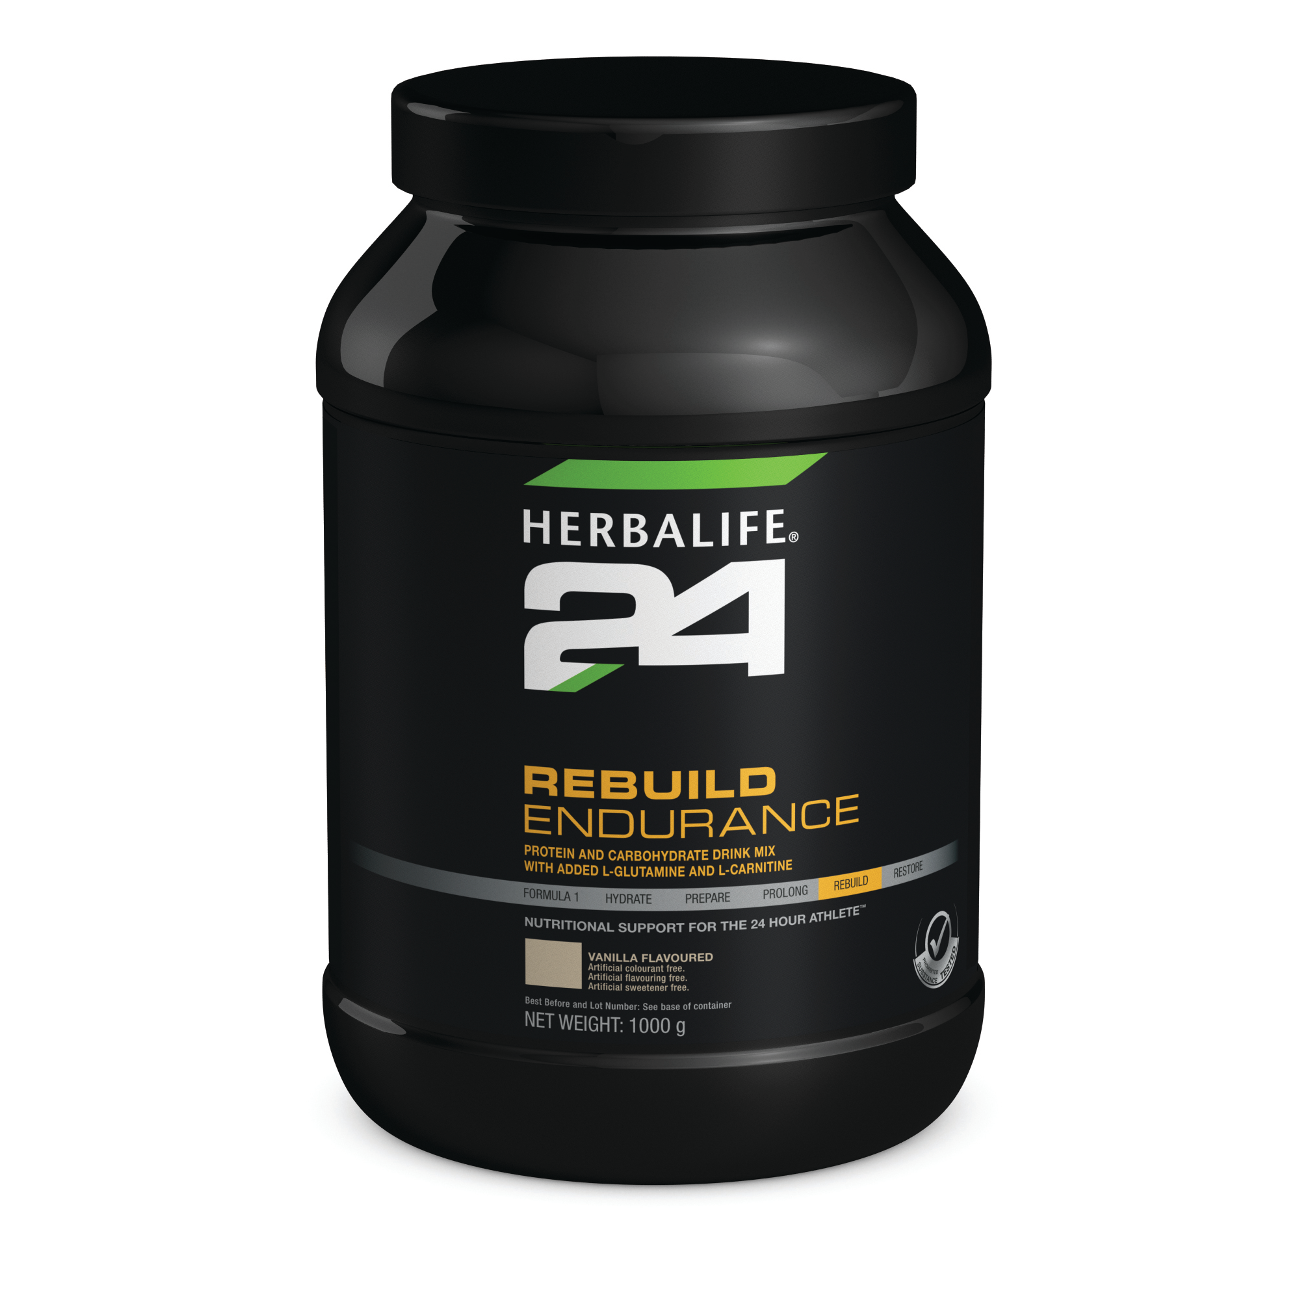 Herbalife24® Rebuild Endurance Protein Shake Vanilla product shot.